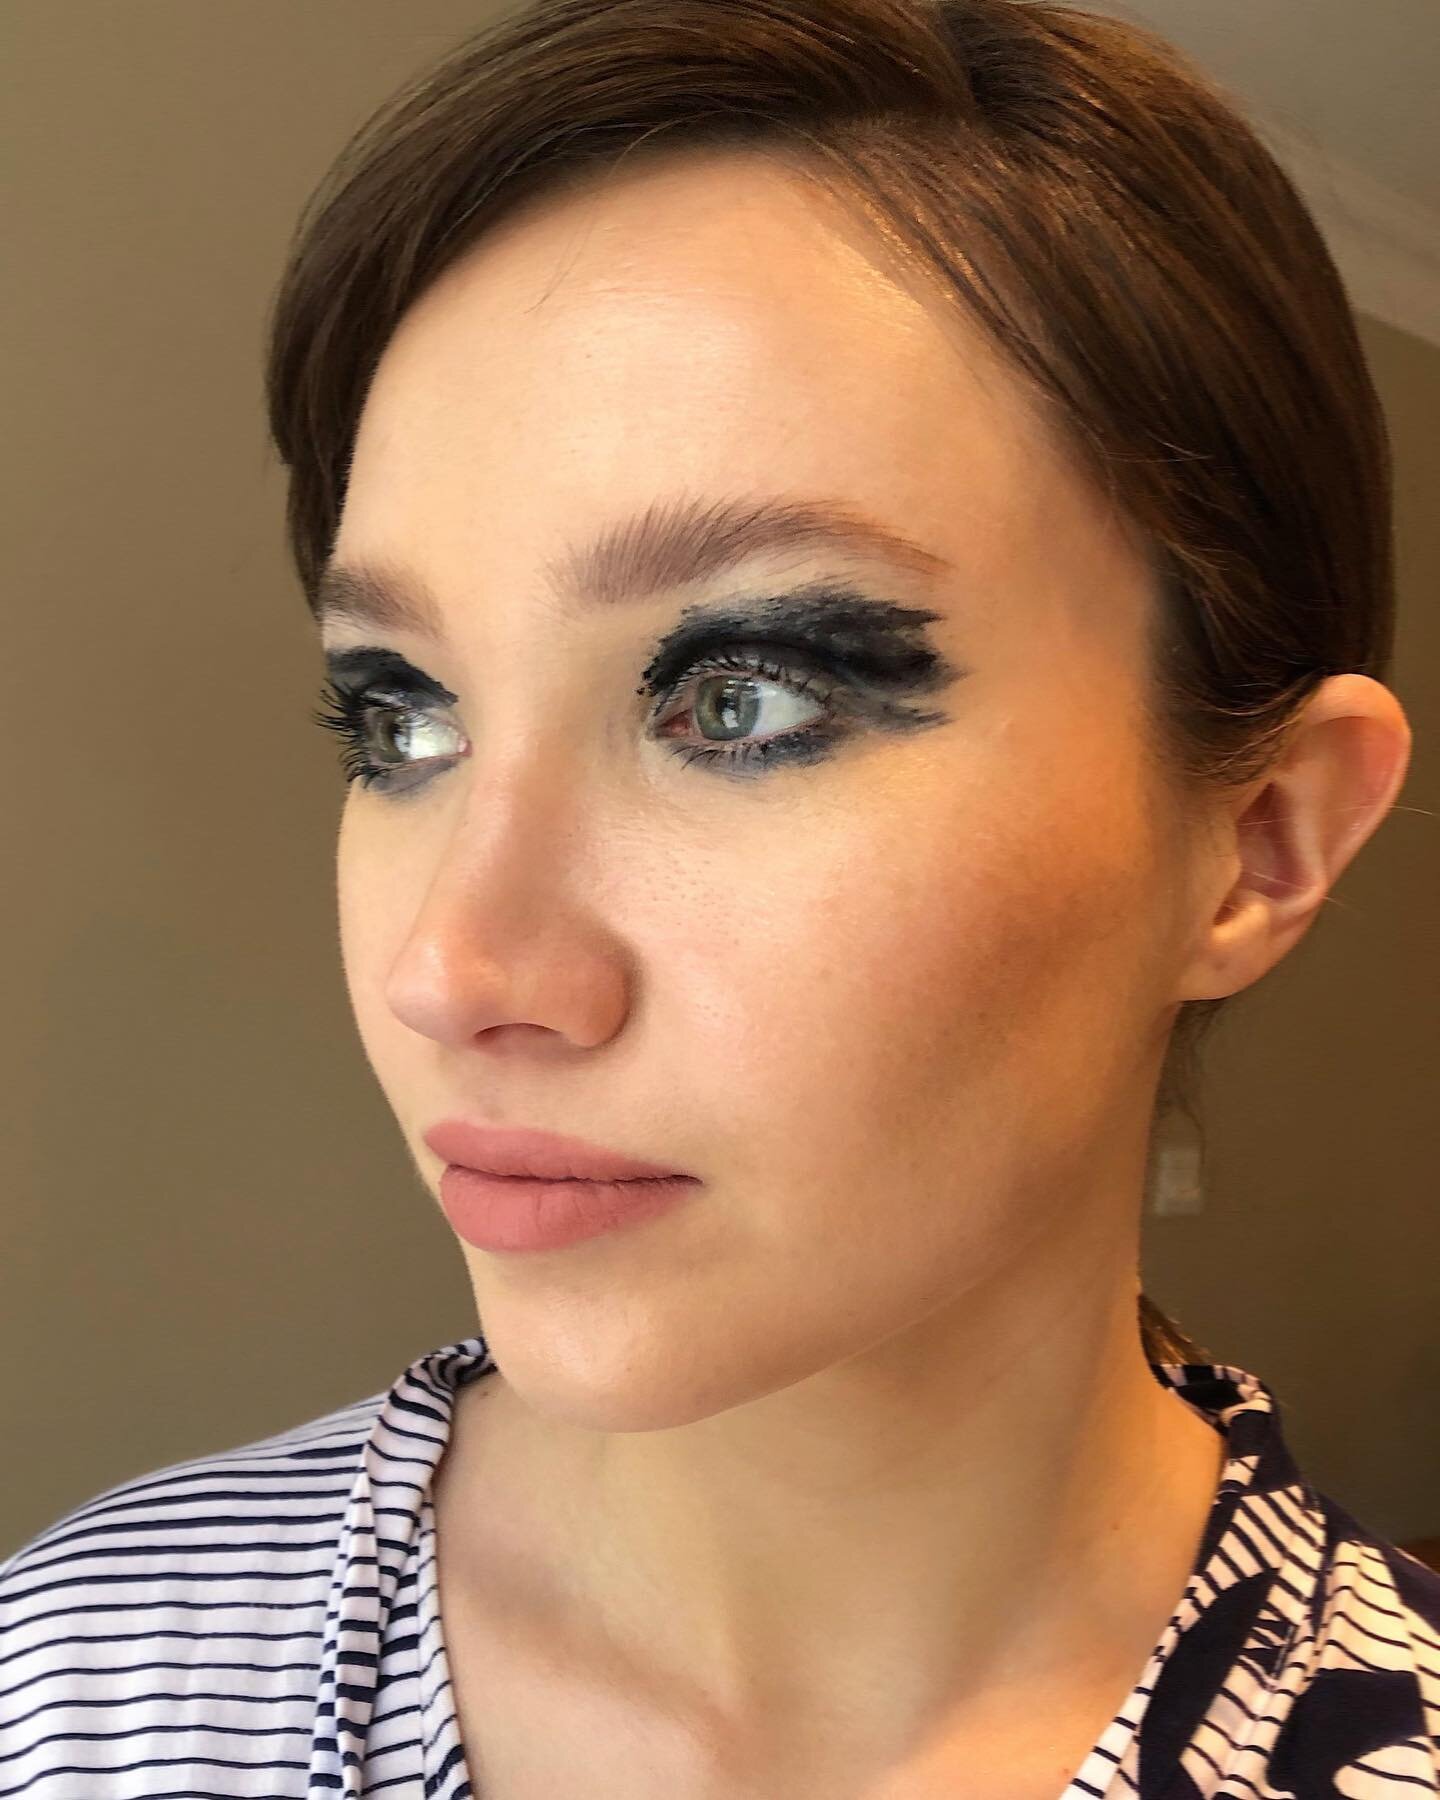 Oil slick 🖤 Makeup @misslivmakeup using @makeupforever on the eyes and @natashadenona on the skin 🖤